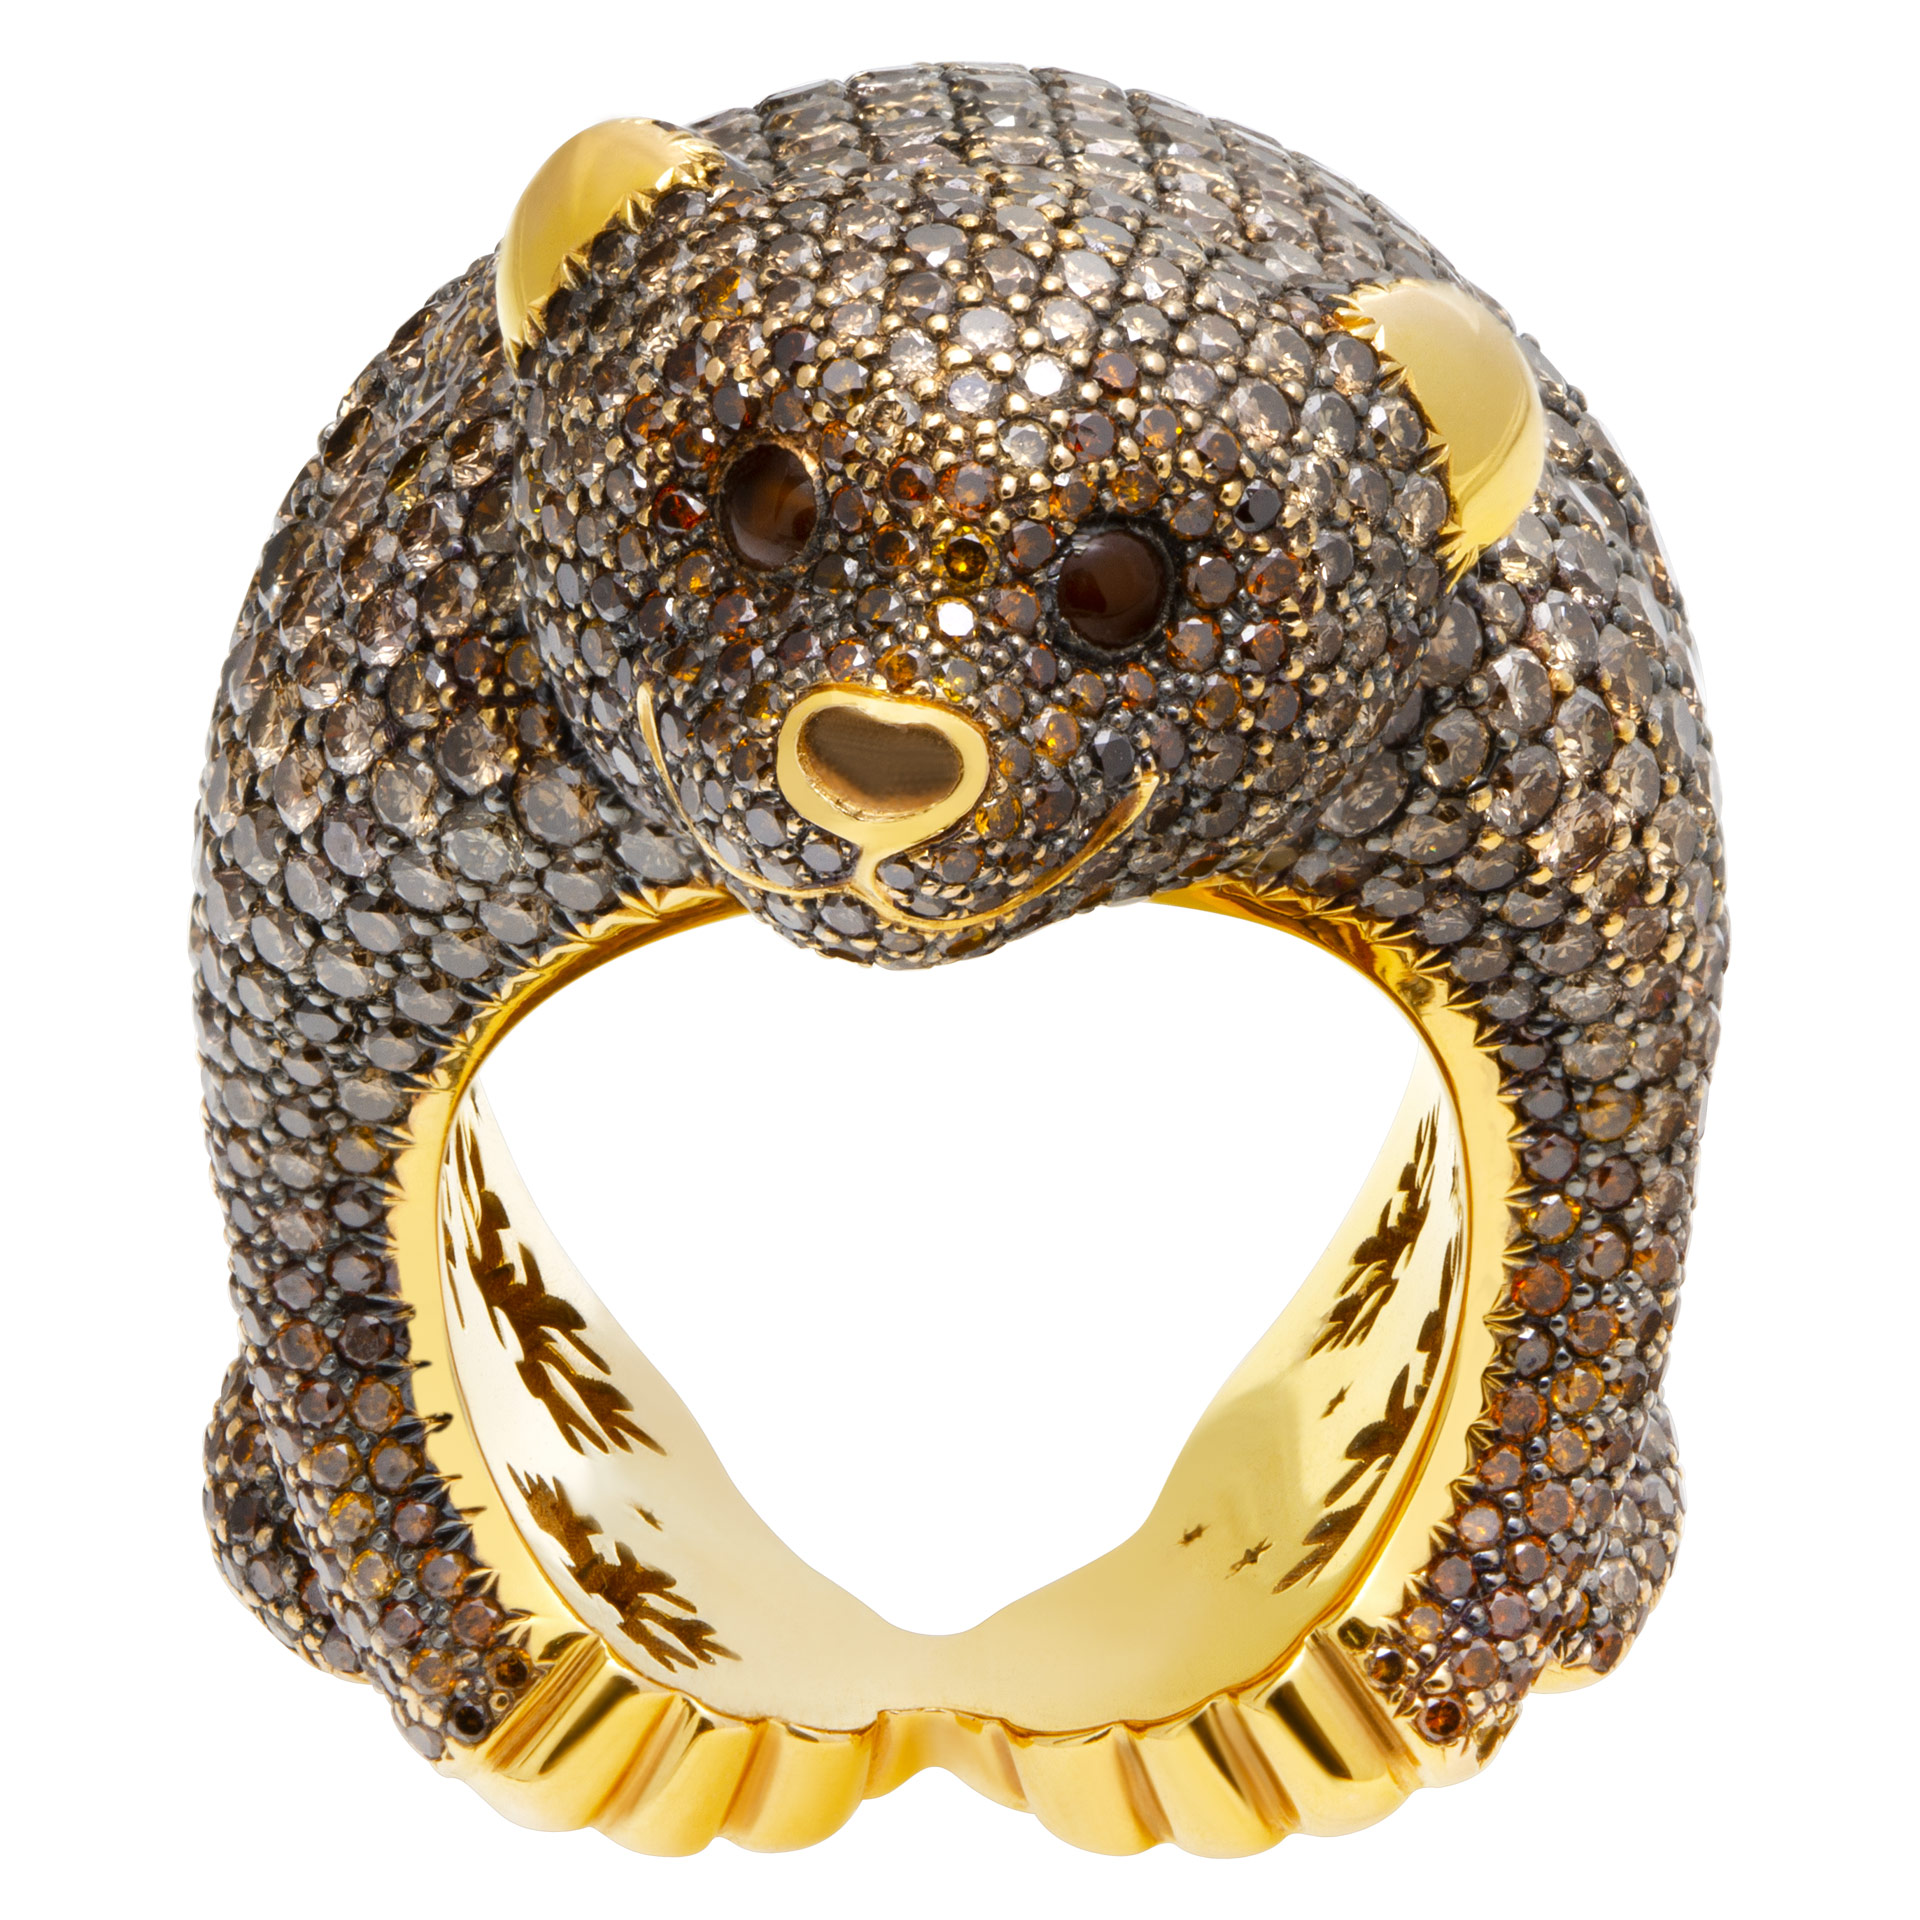 Masterpiece Chopard Diamond bear "Animal World Collection" 18K Ring image 1